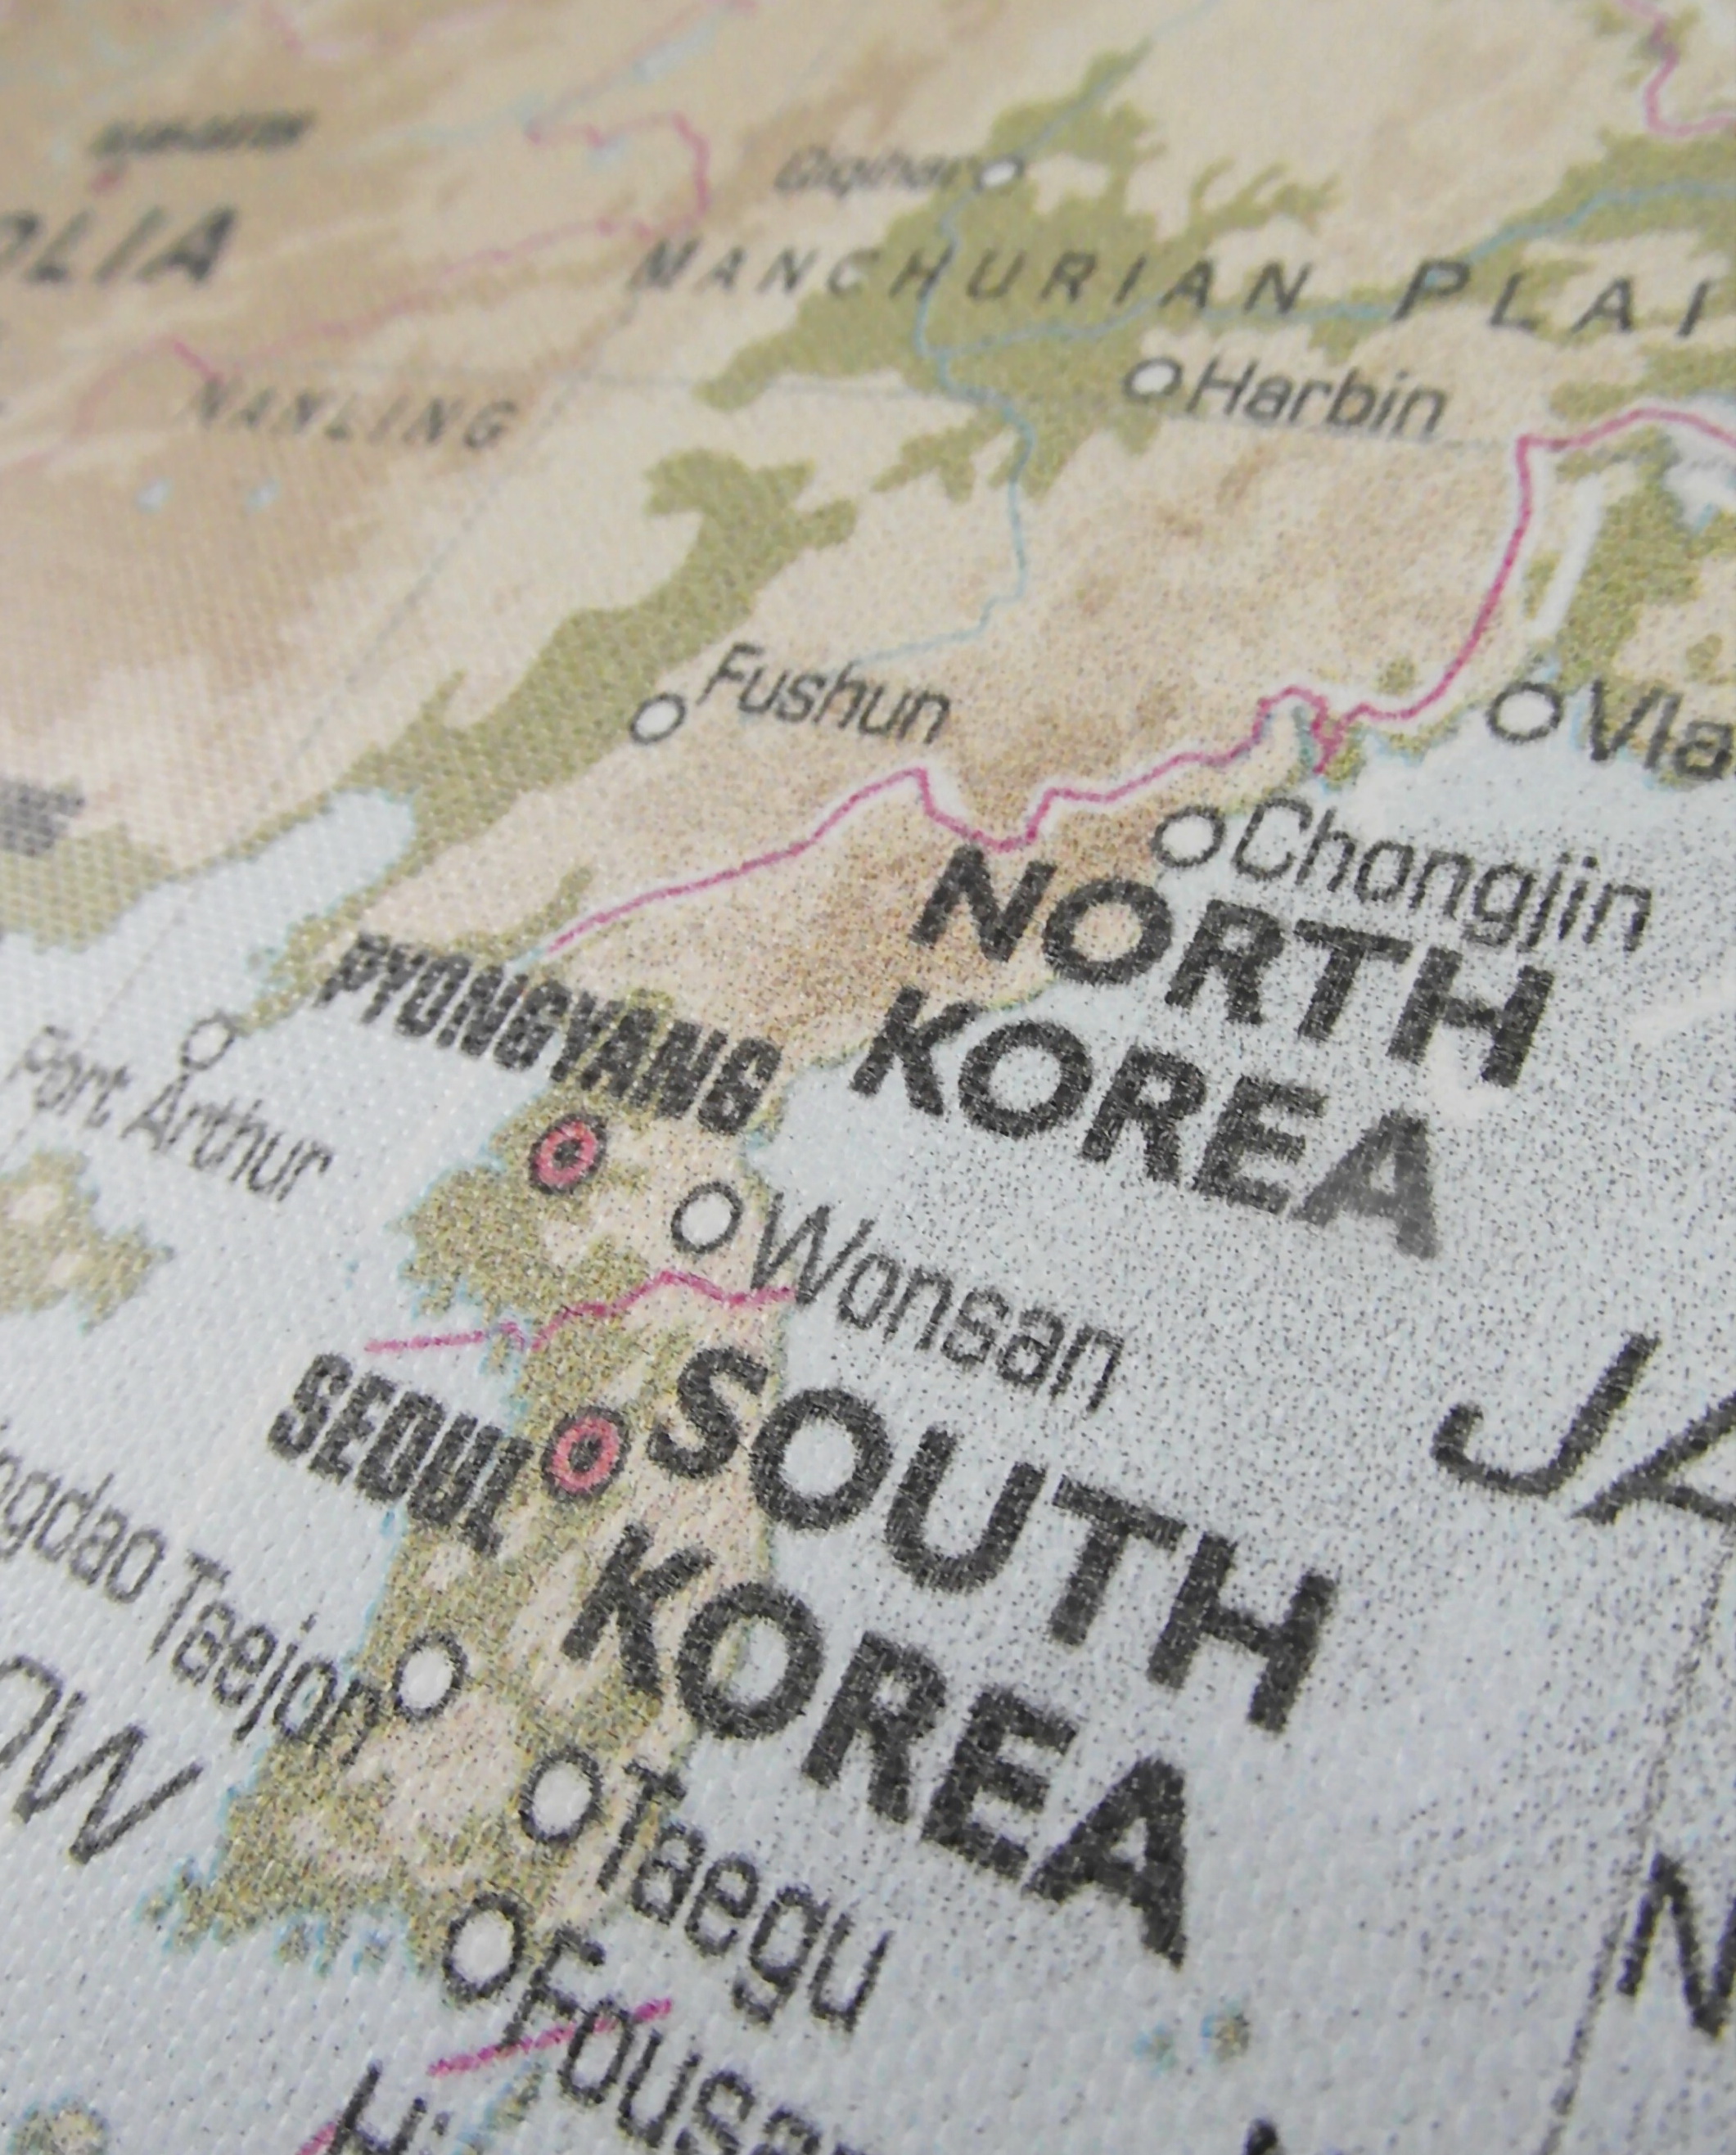 North and south korea map photo